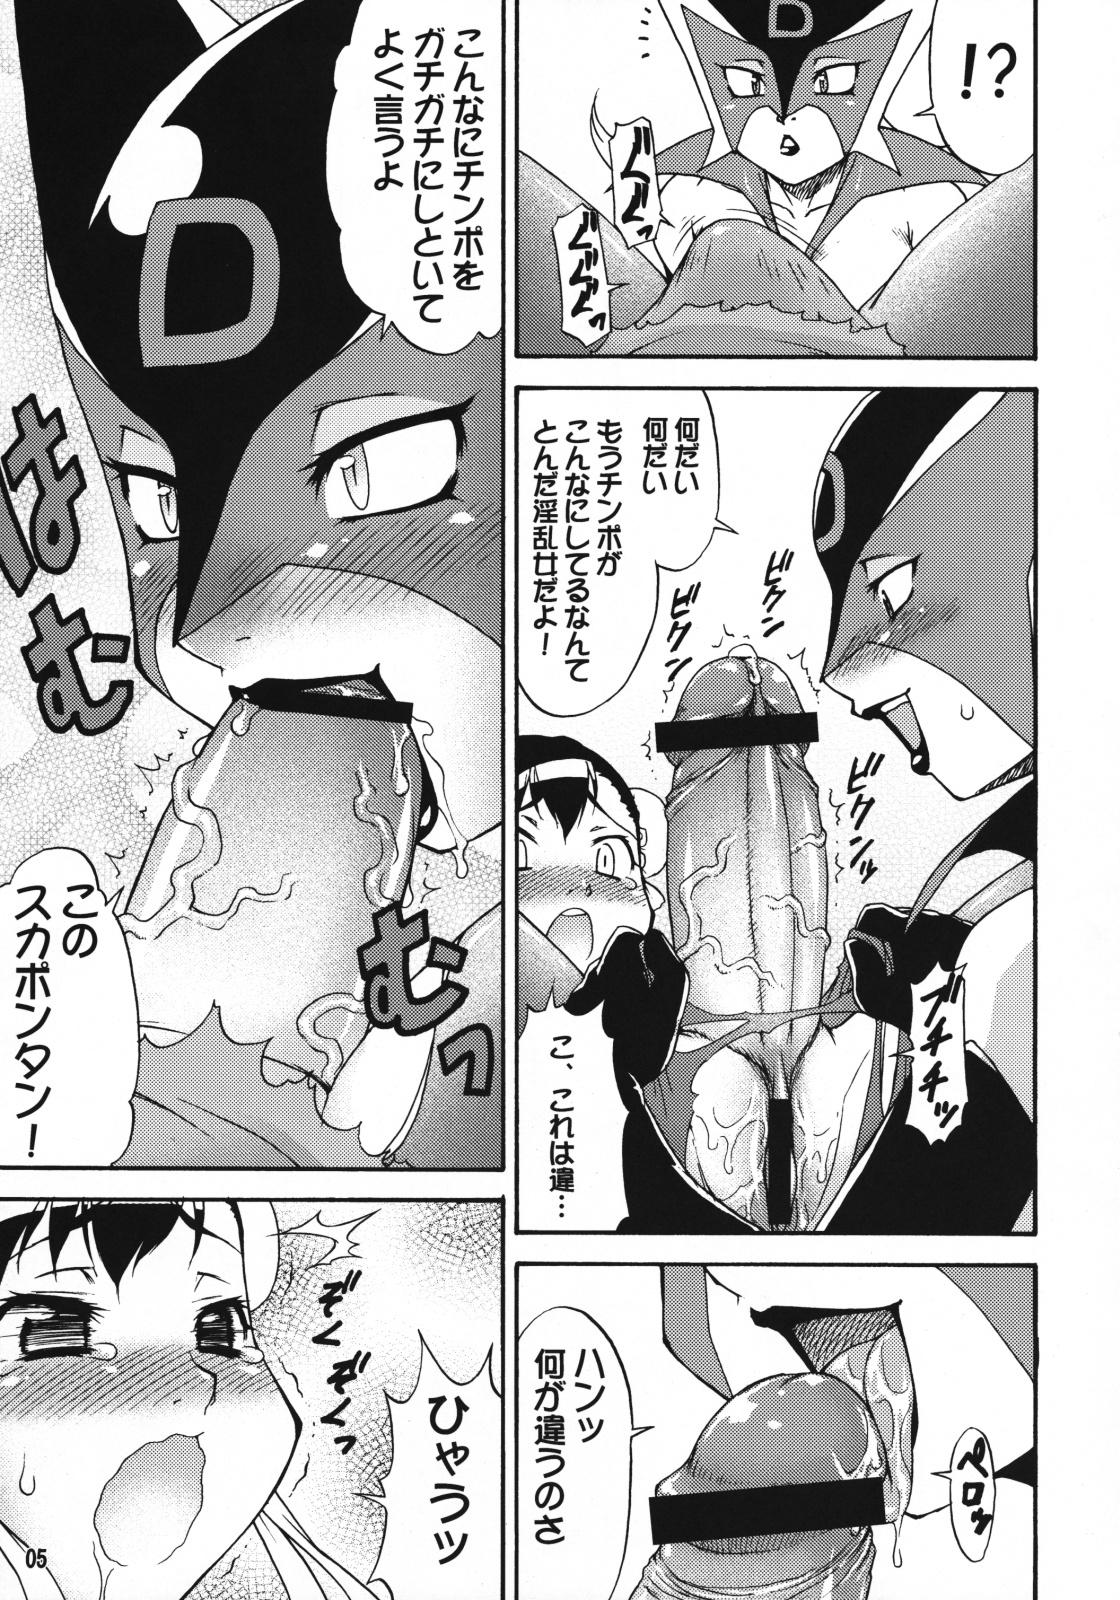 Menage Mikawa Ondo 6 - Street fighter Darkstalkers Princess crown Cyberbots Yatterman Petite Porn - Page 4